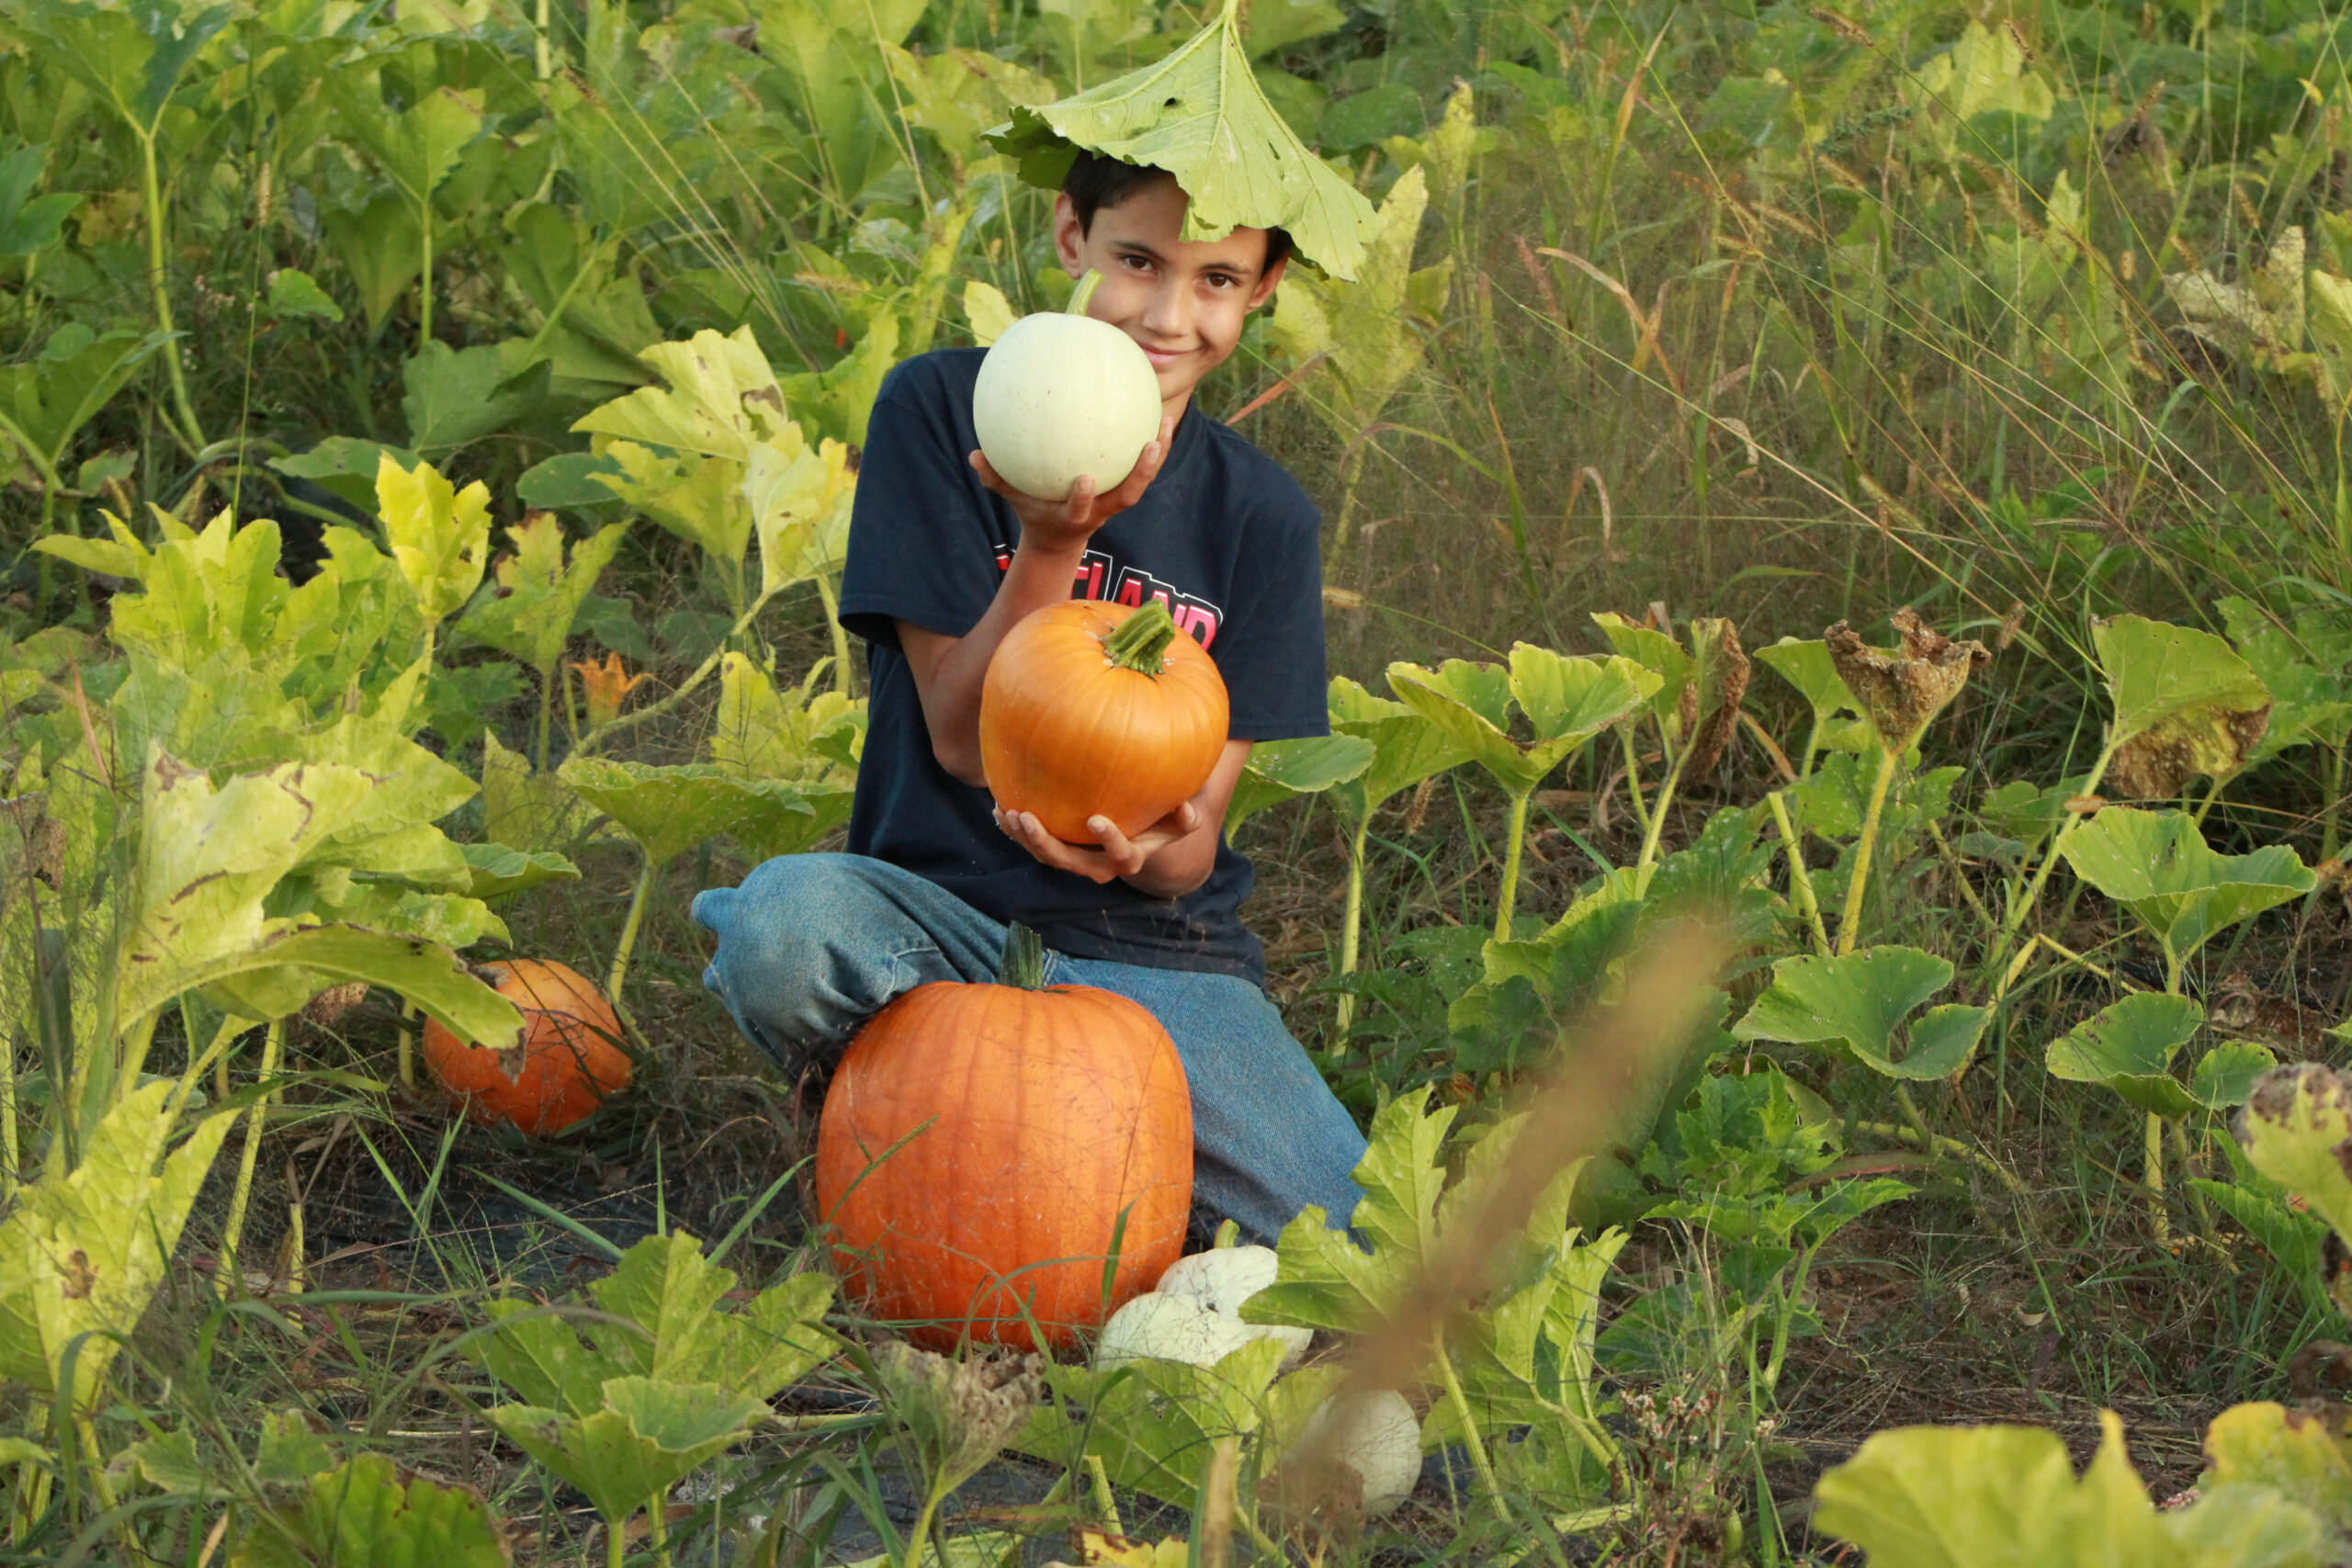 Farmer boy with pumpkins in a field.